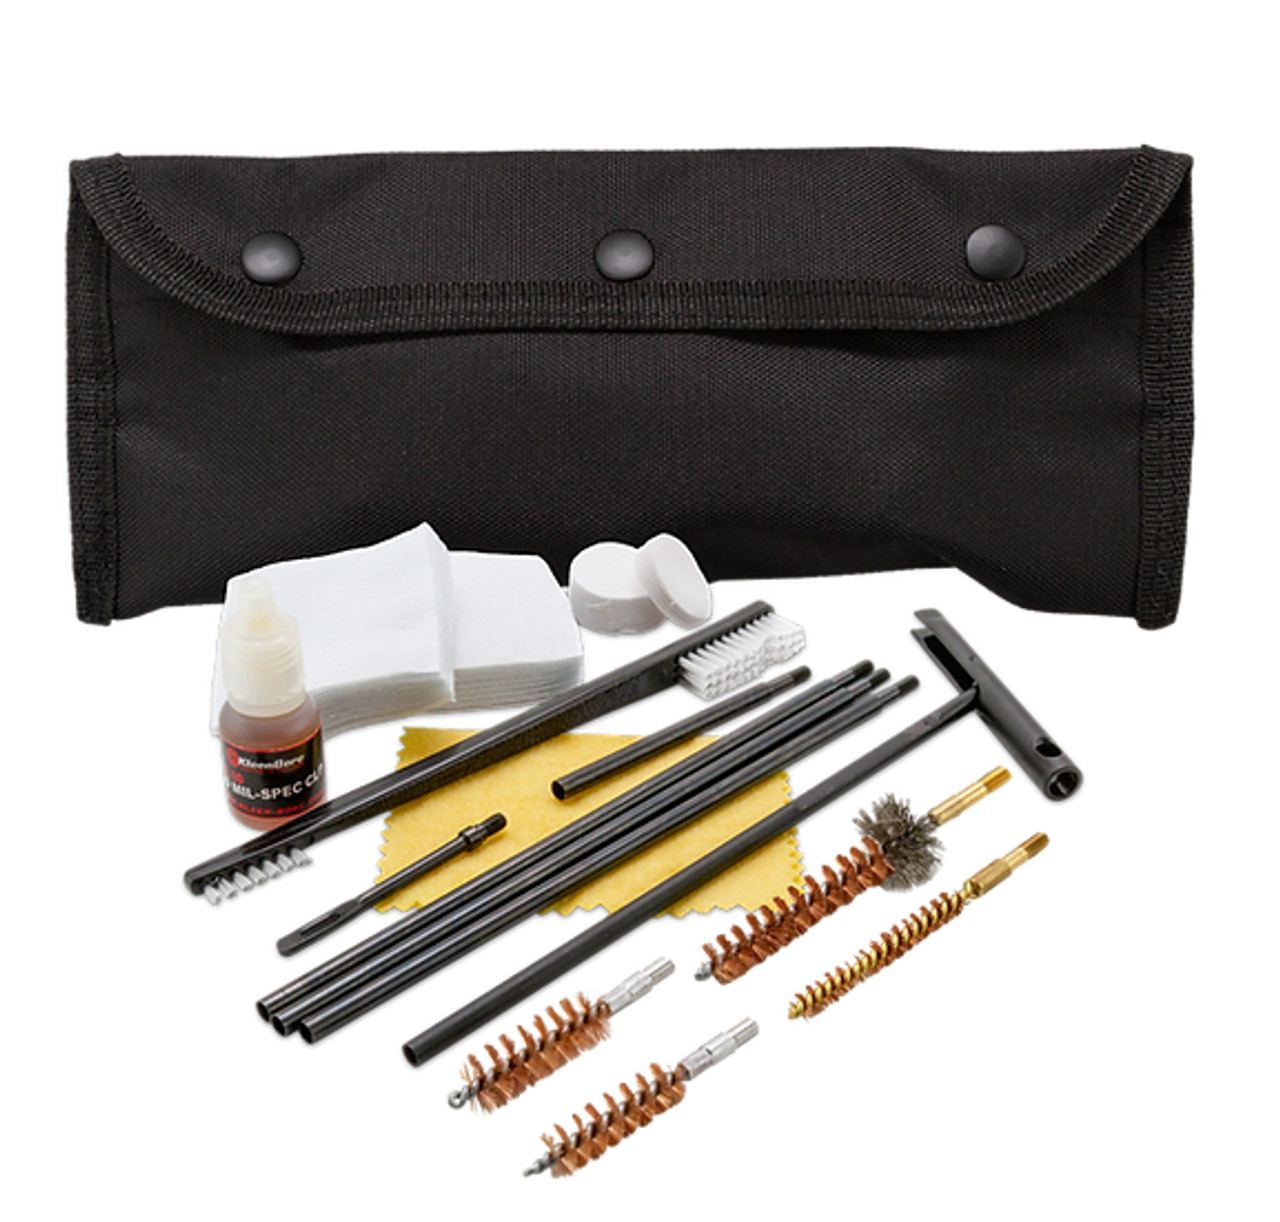 KleenBore Handgun/Rifle Cleaning Kit